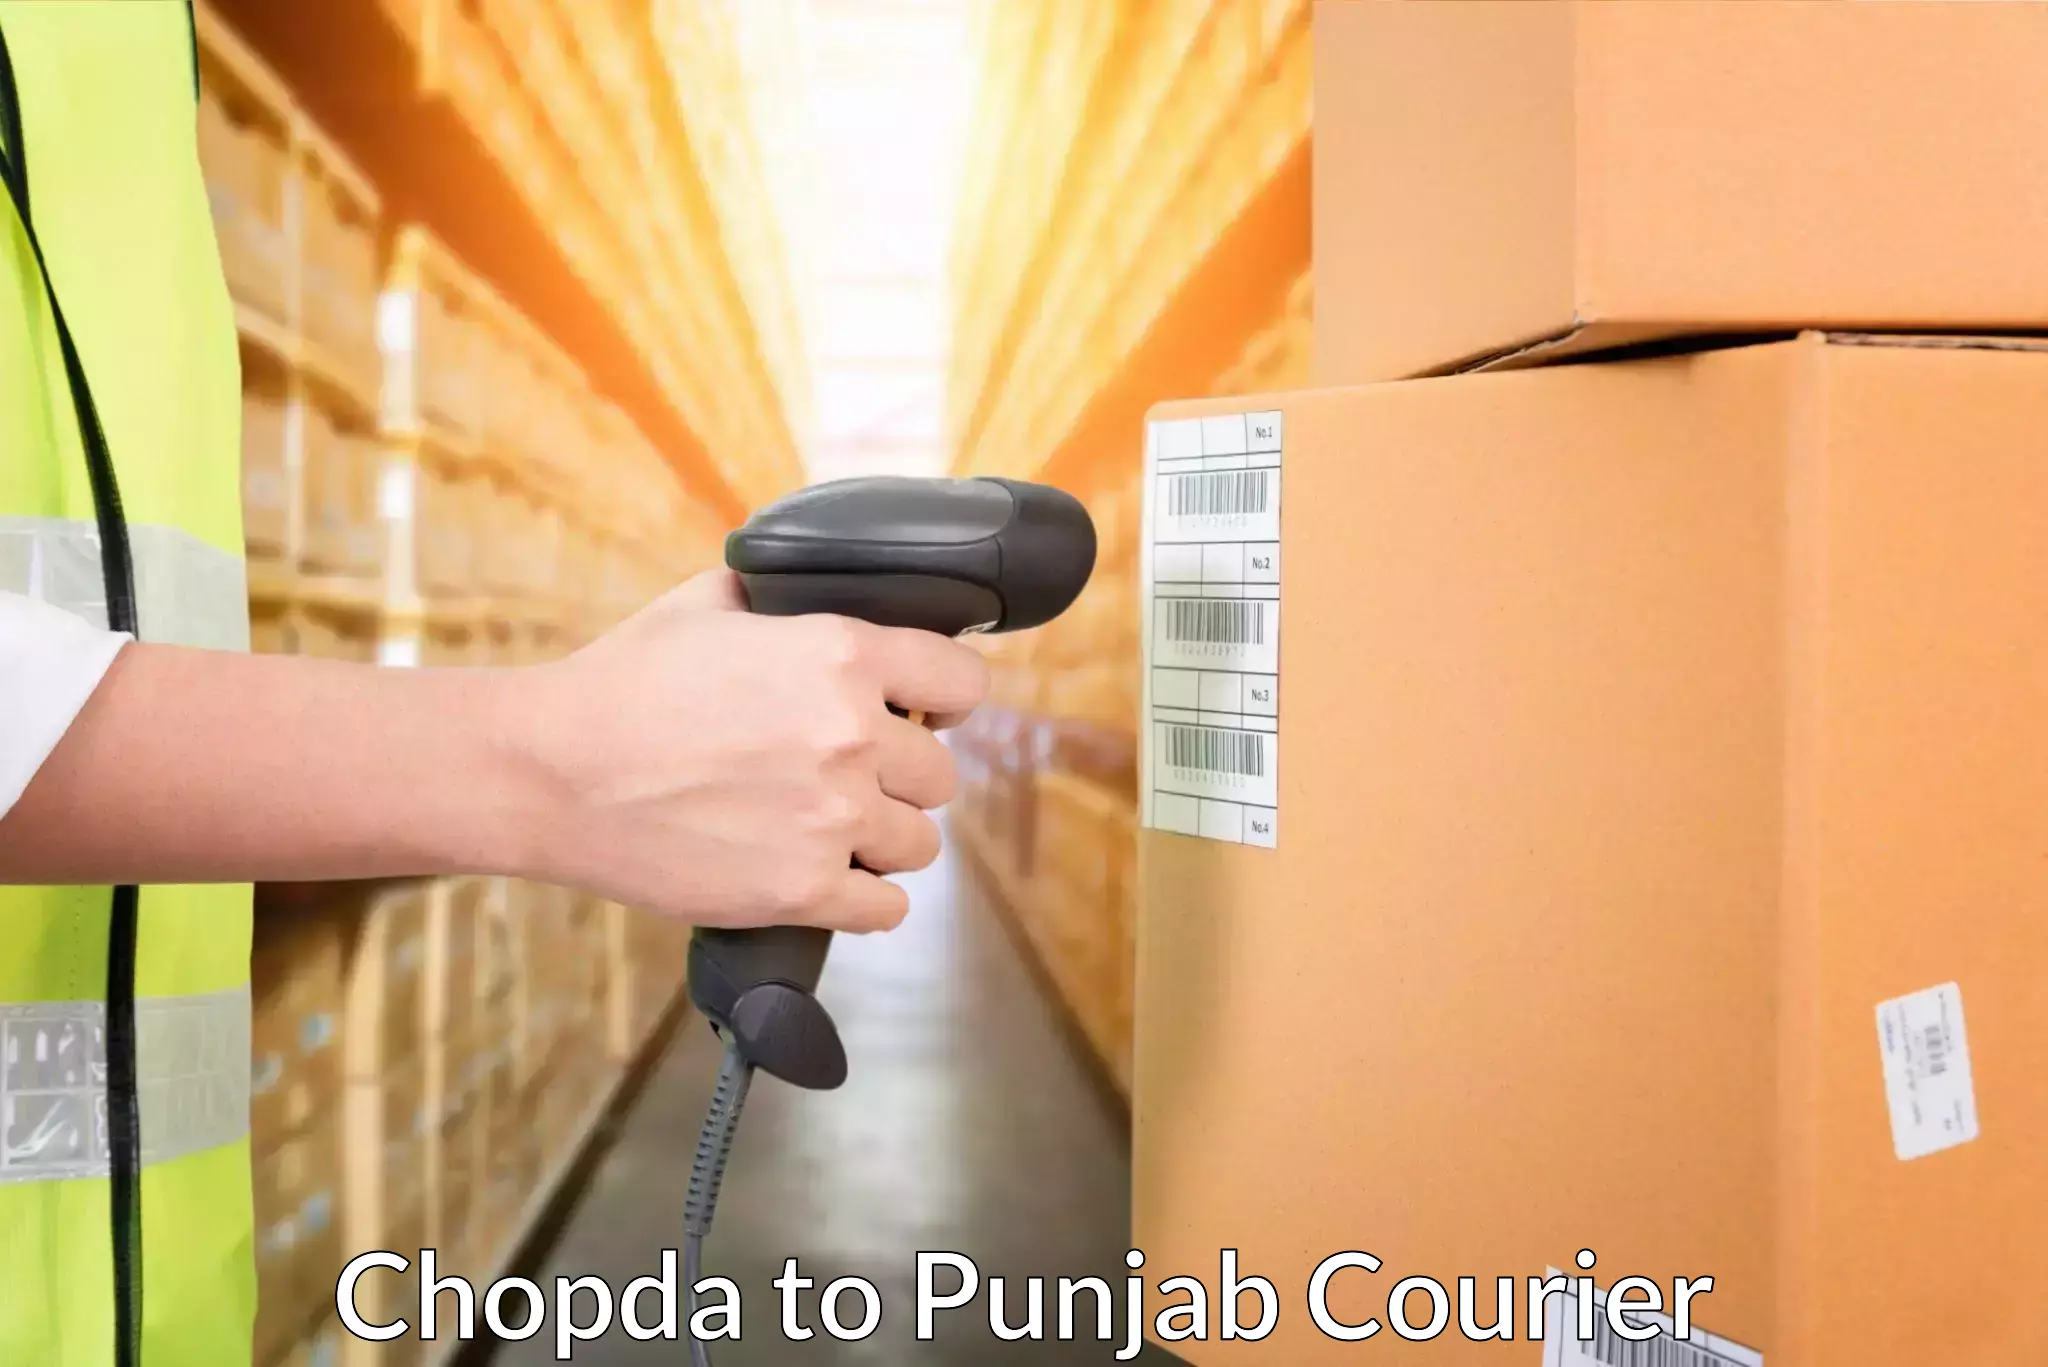 Quick dispatch service Chopda to Zirakpur